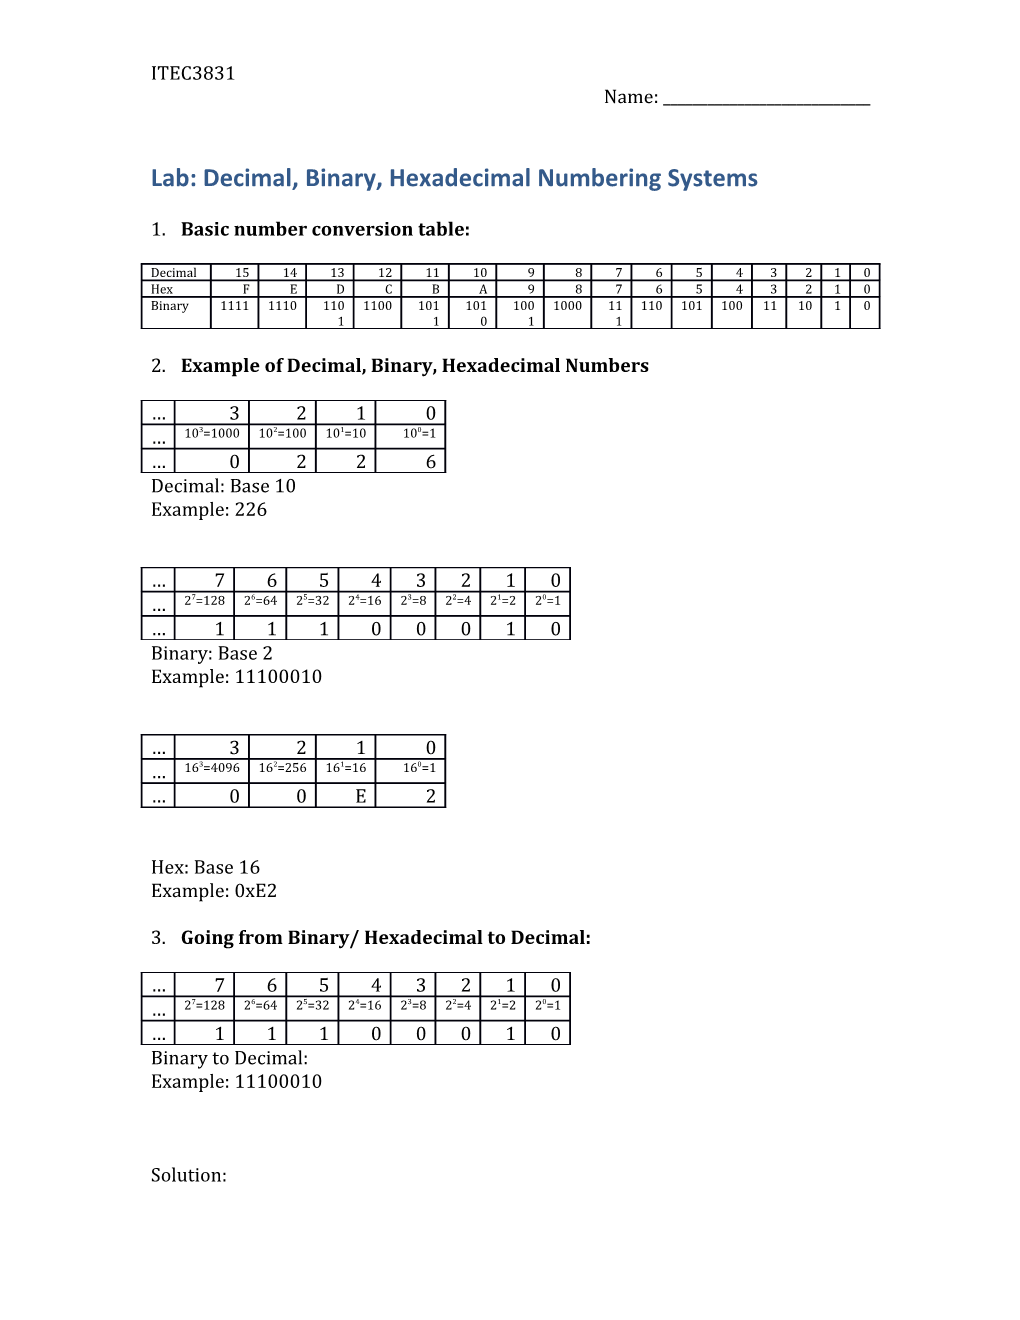 Lab: Decimal, Binary, Hexadecimal Numbering Systems